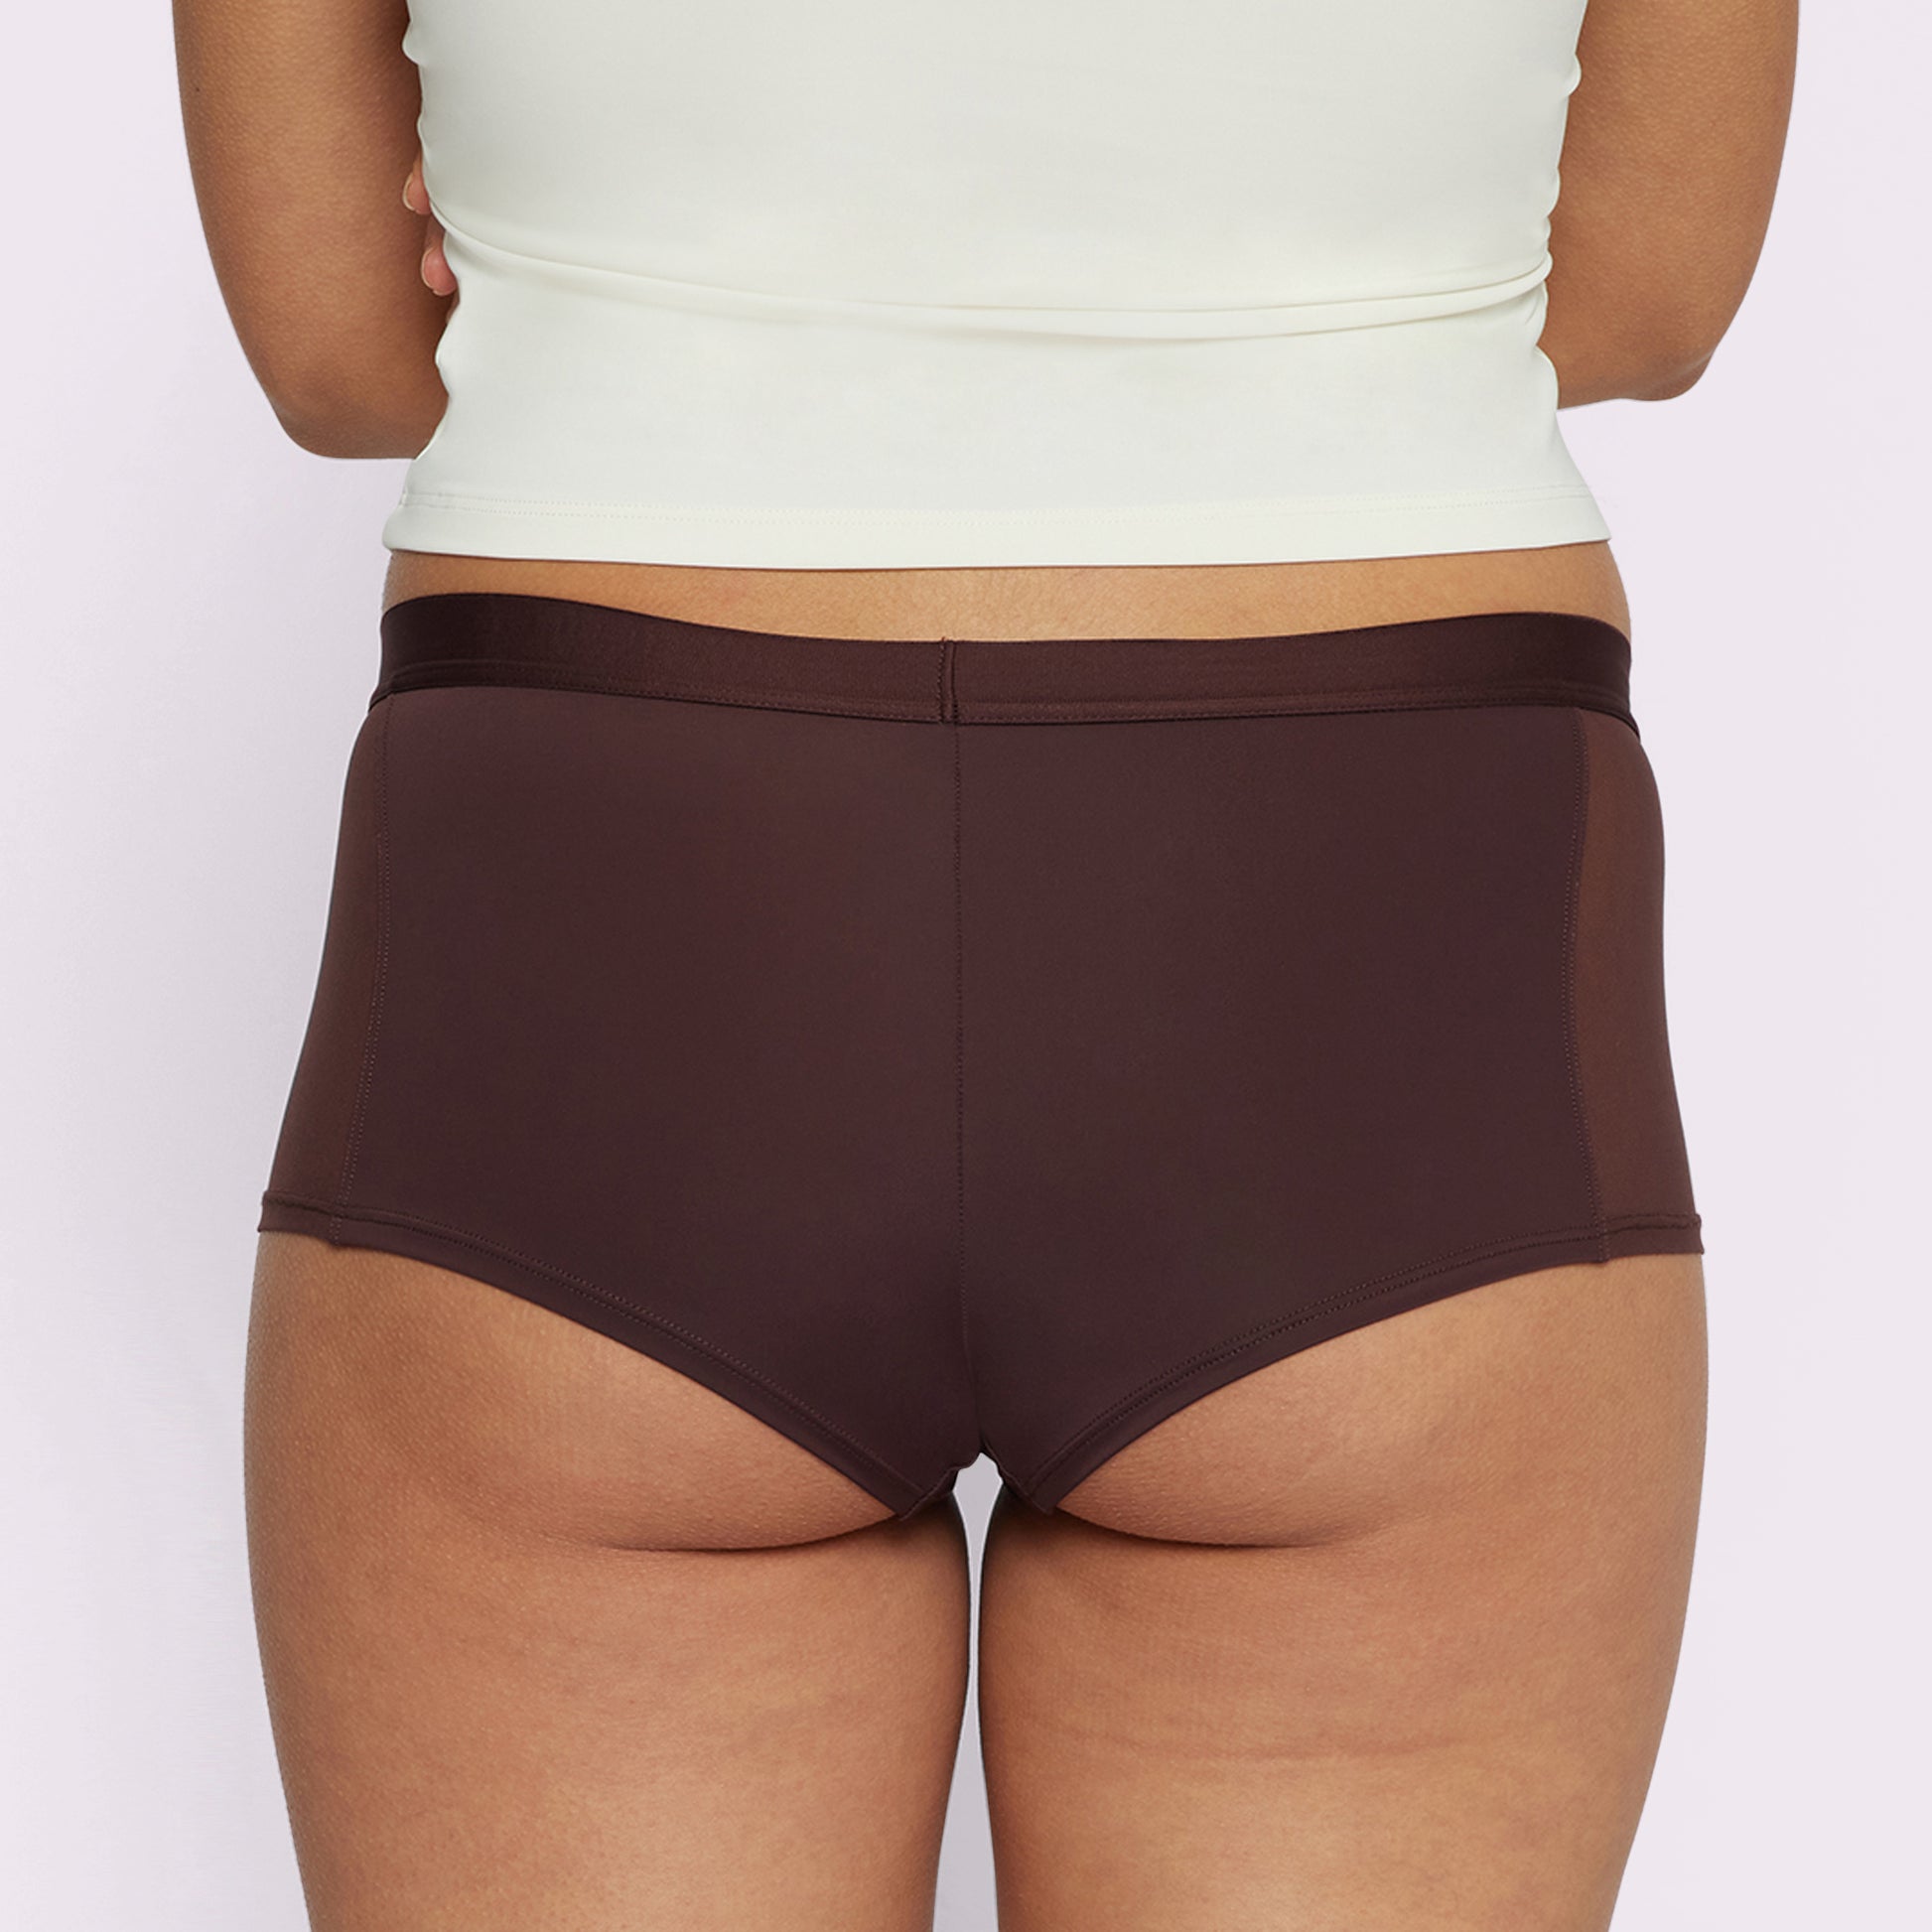 Boyshort, Women's Underwear, Starting at $9